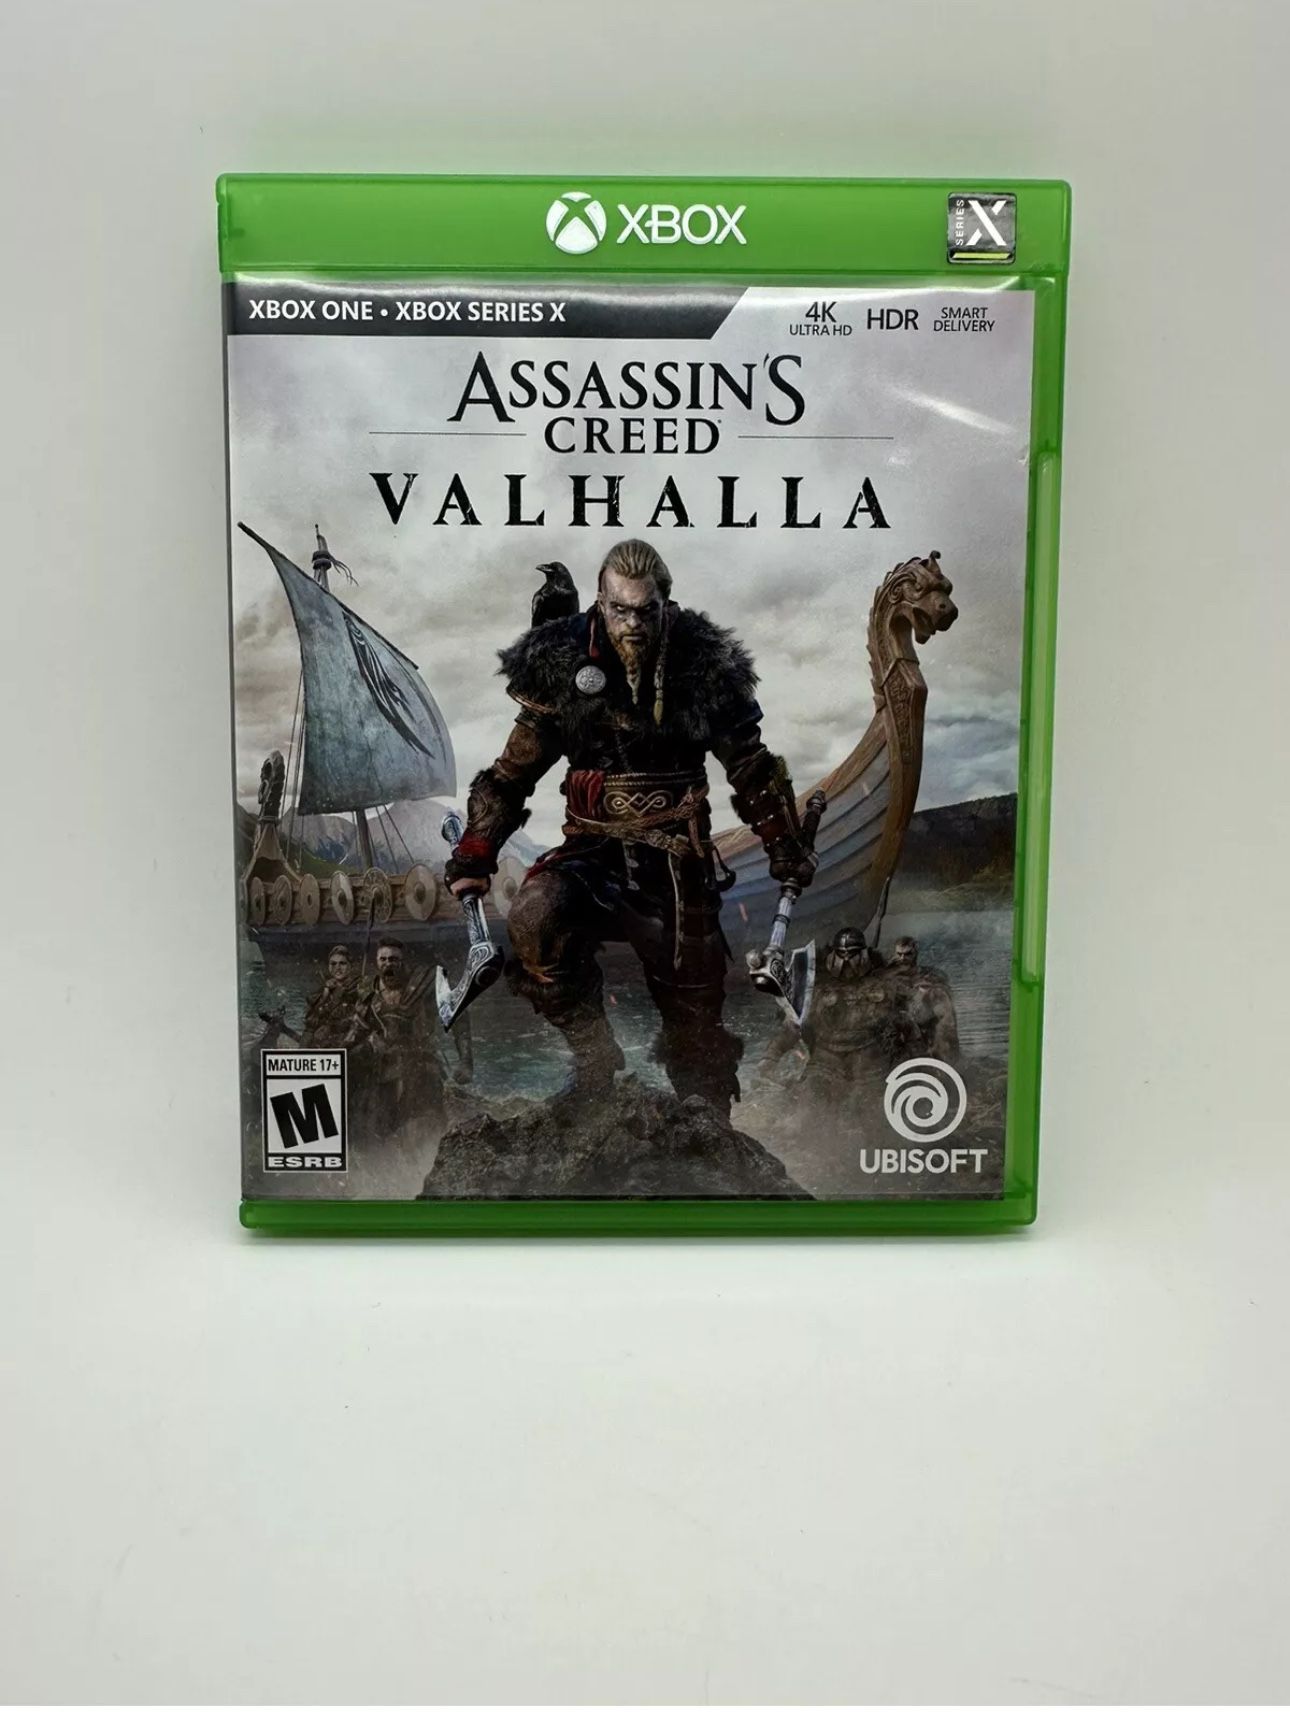 Assassin's Creed Valhalla (XBox One / XBox Series X) Likenew